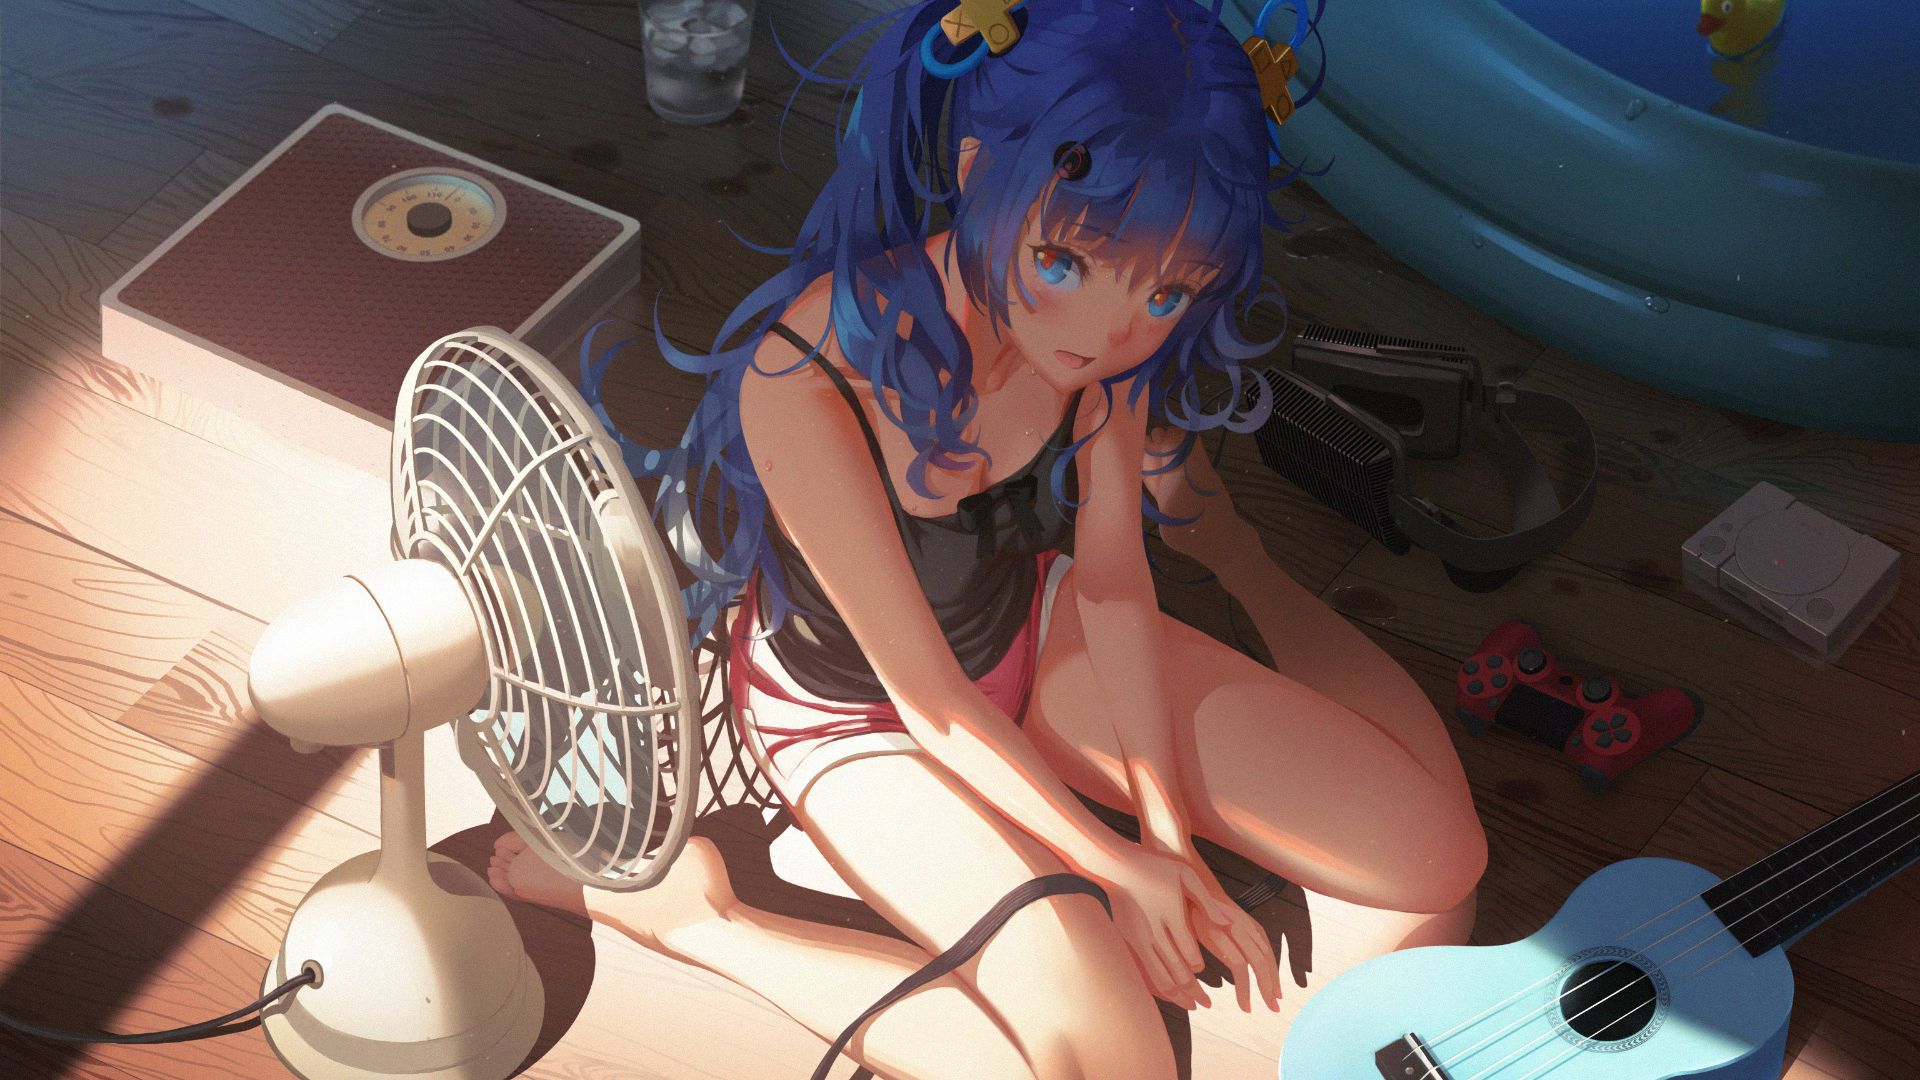 Desktop Wallpaper Cute, Anime Girl Playing Guitar, Blue Hair, Original, Hd  Image, Picture, Background, D3cfb3